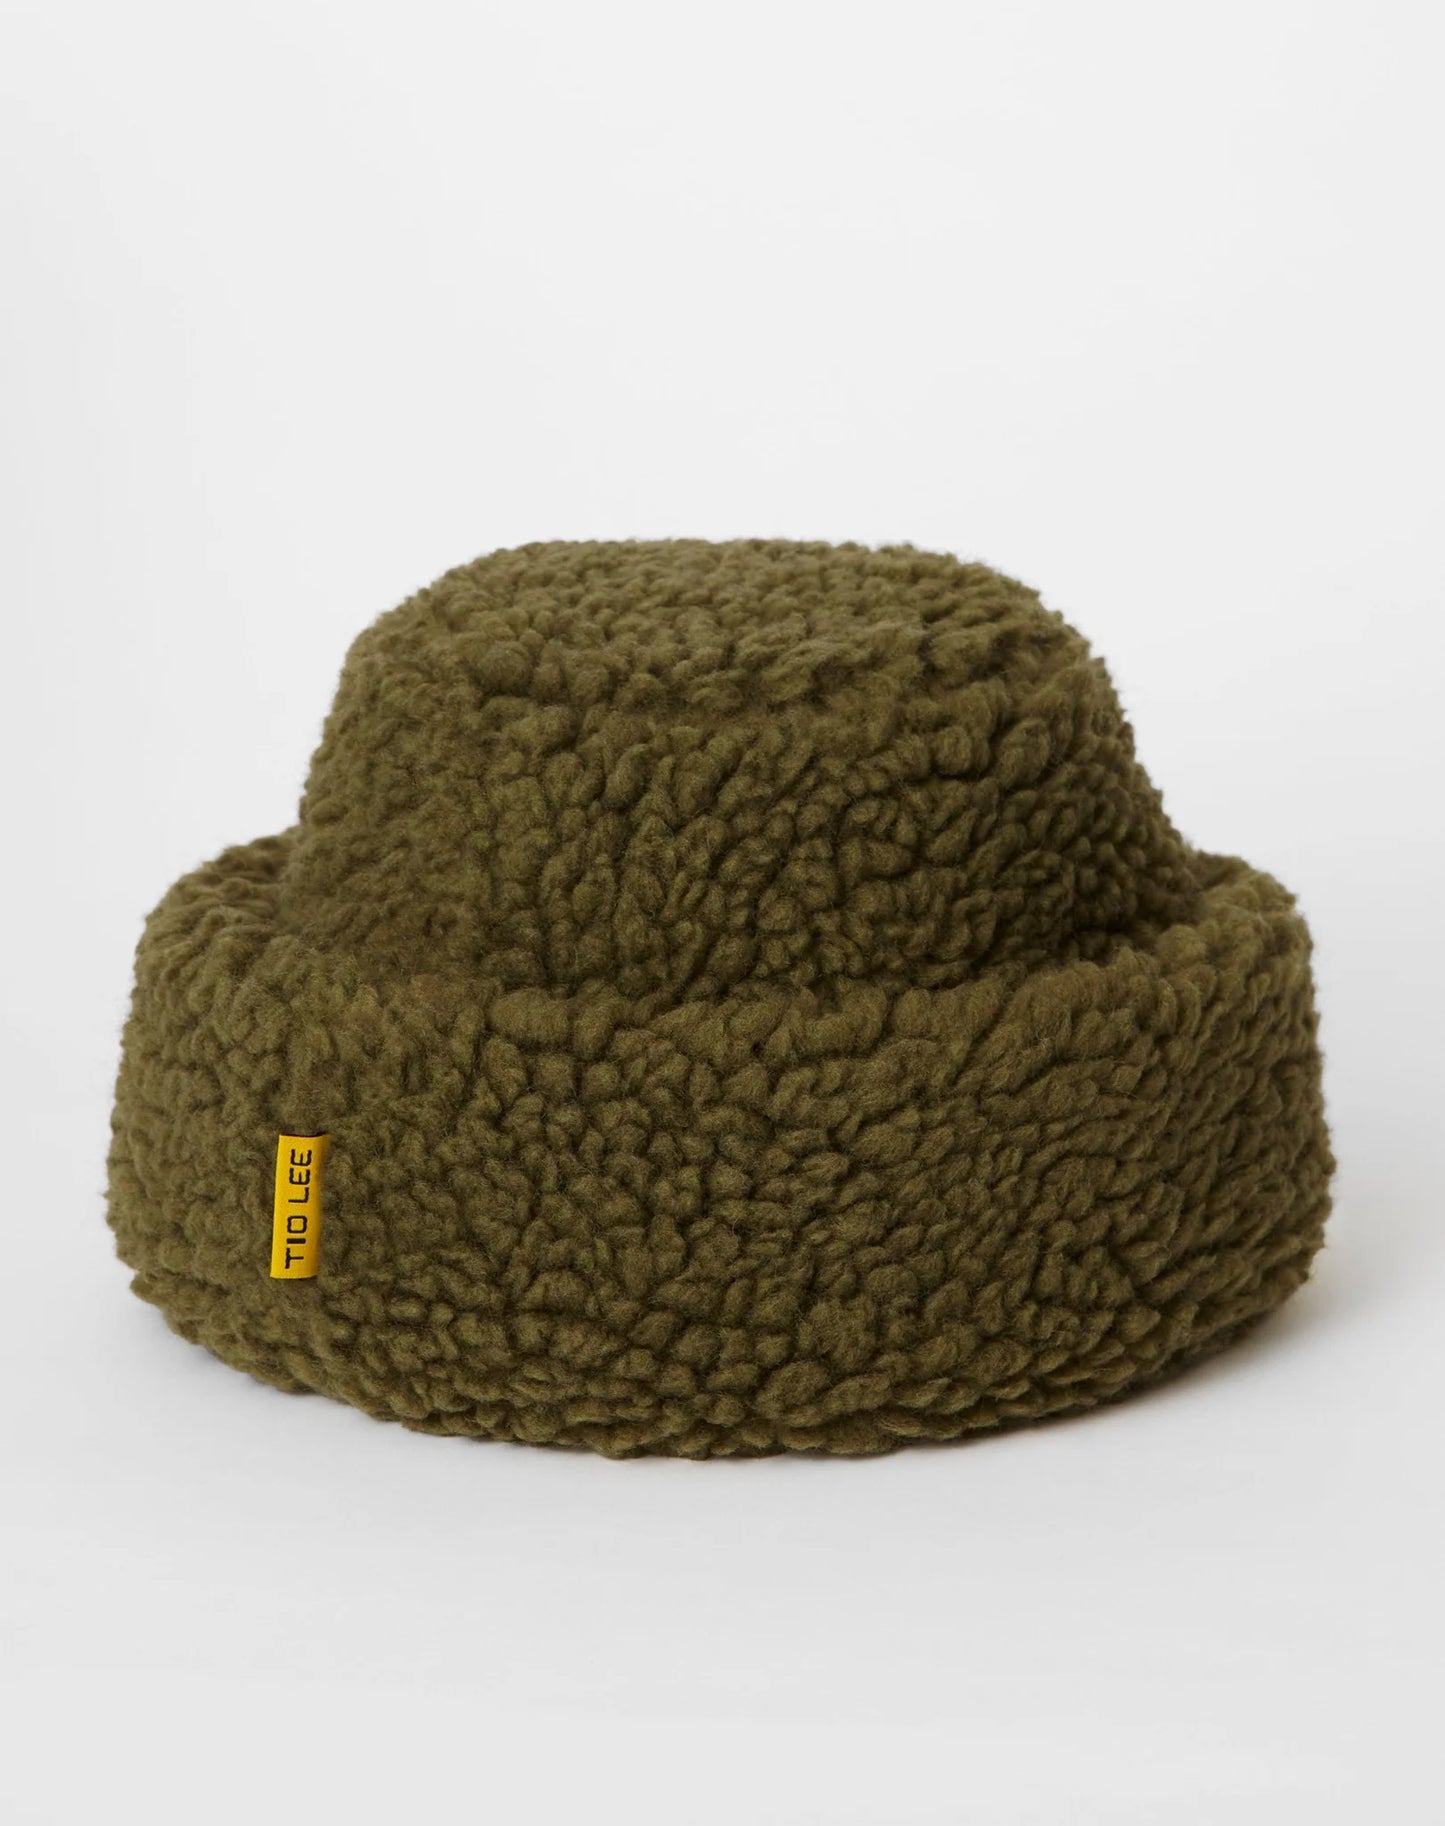 Fargo Hat